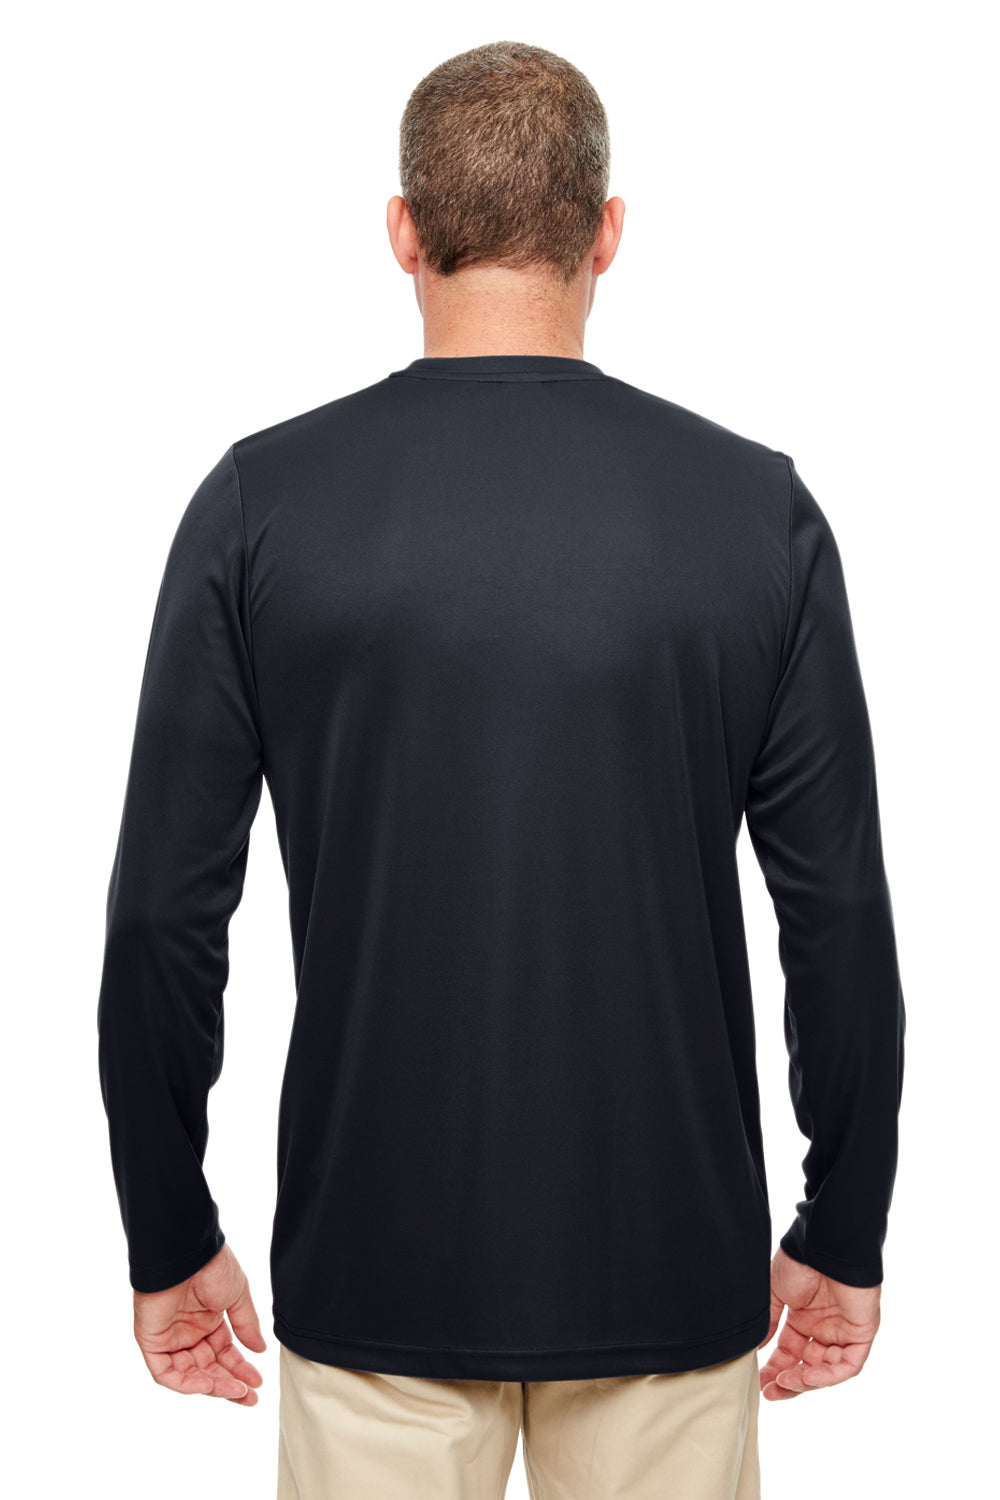 UltraClub 8622 Mens Cool & Dry Performance Moisture Wicking Long Sleeve Crewneck T-Shirt Black Back